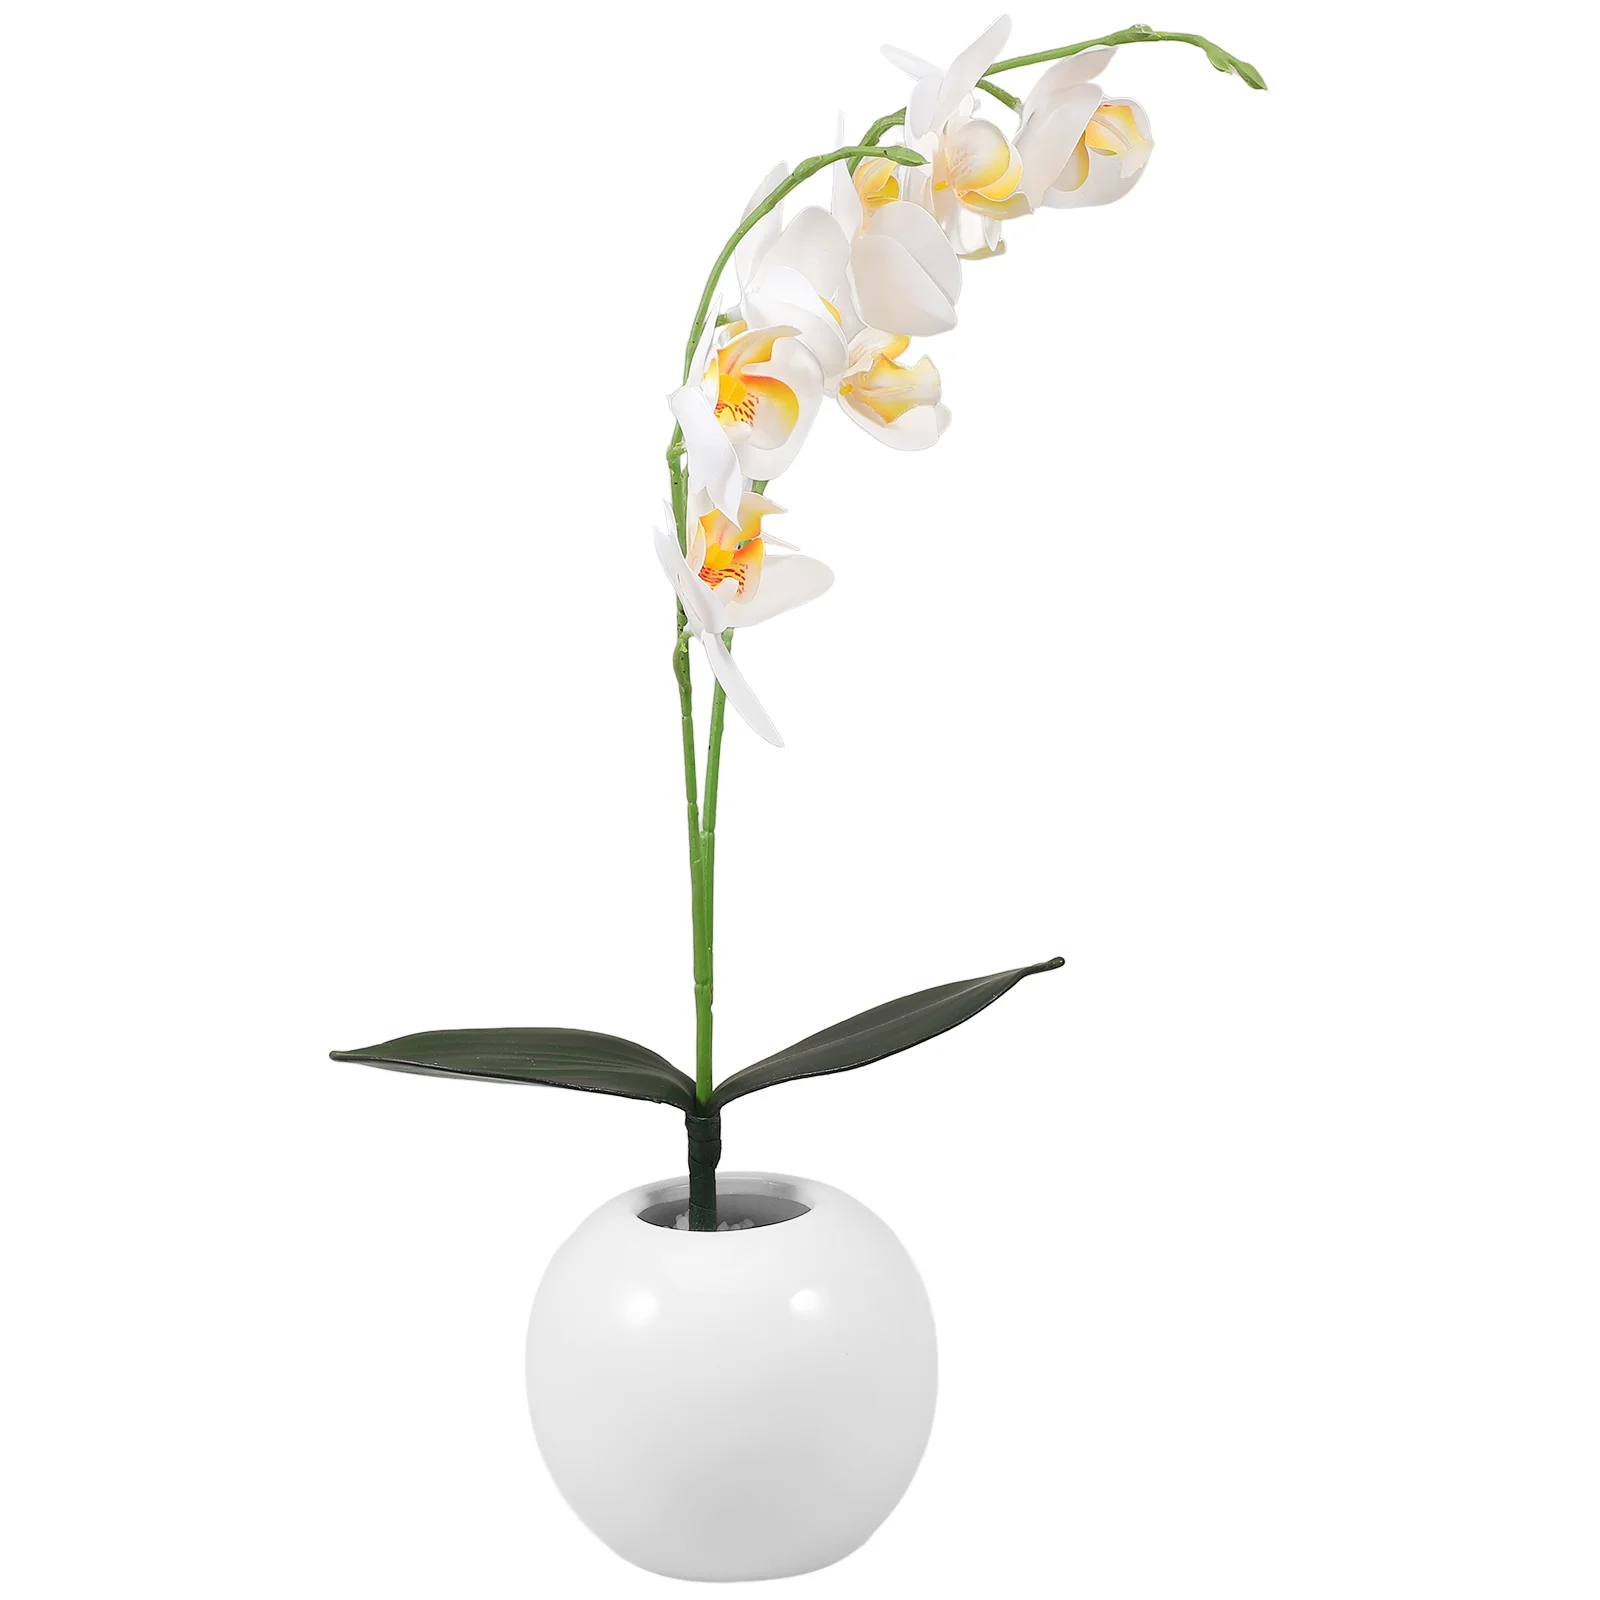 

Phalaenopsis Potted Plant Lifelike Decorative Faux Flower Bonsai Artificial Flowers